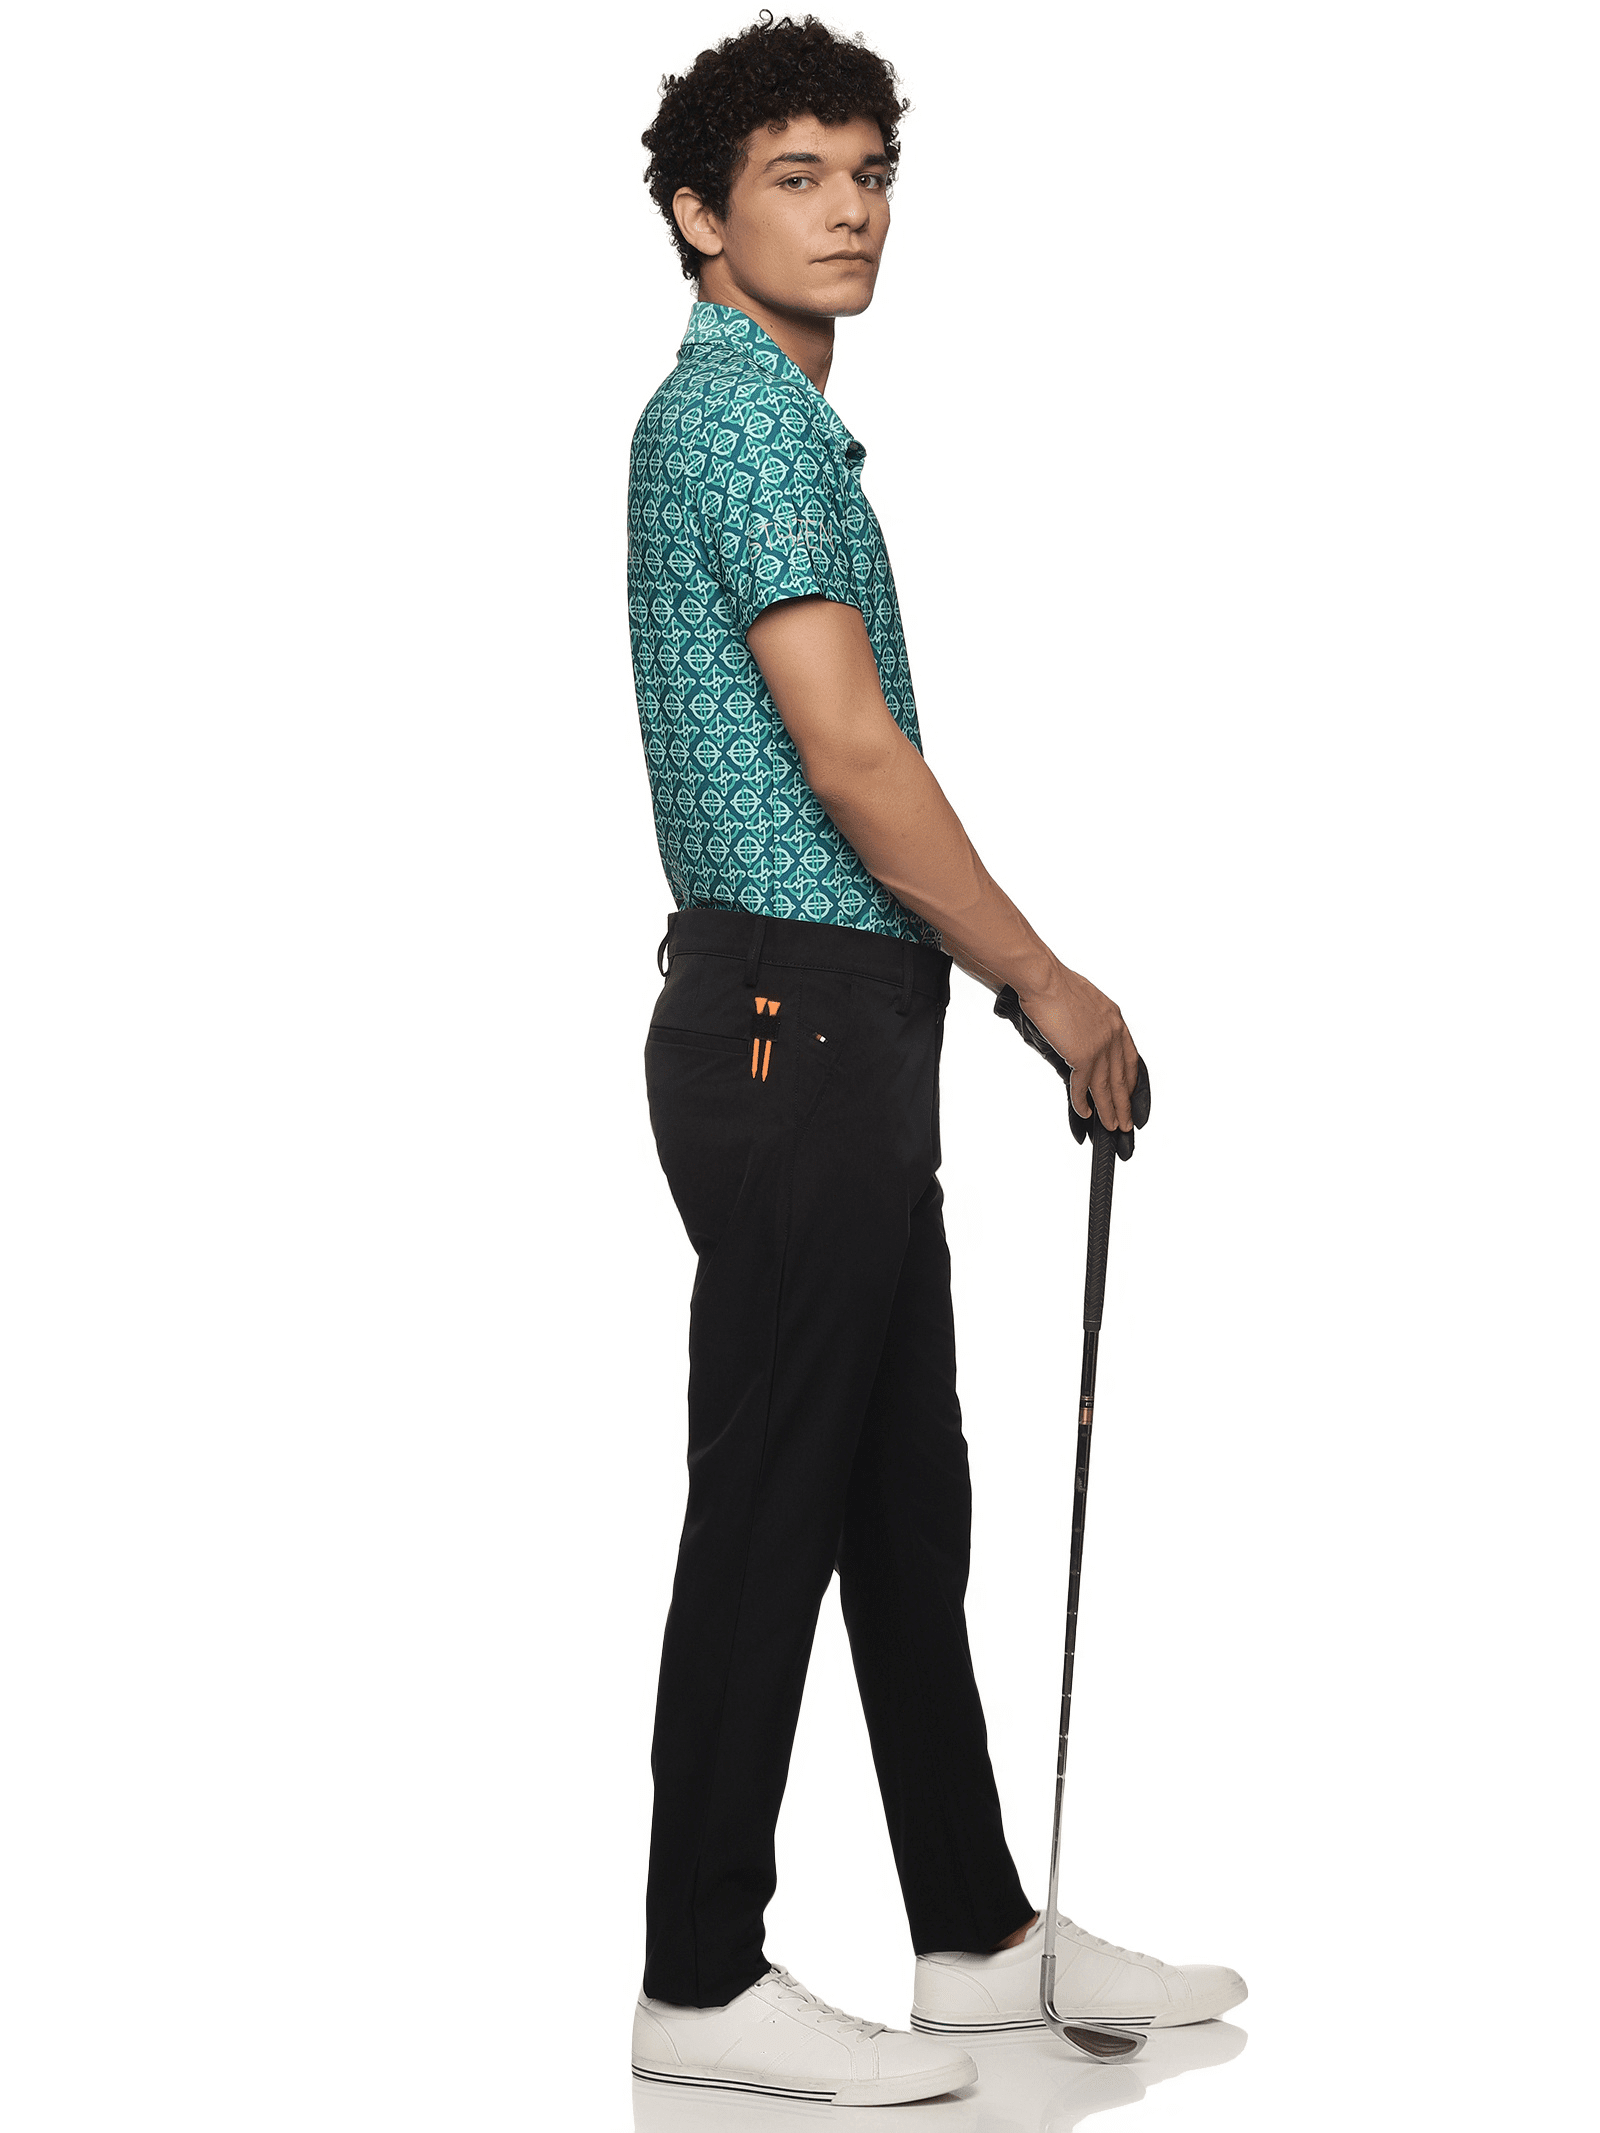 Styzen Men’s Active Golf Trousers (Flexi-Waist)